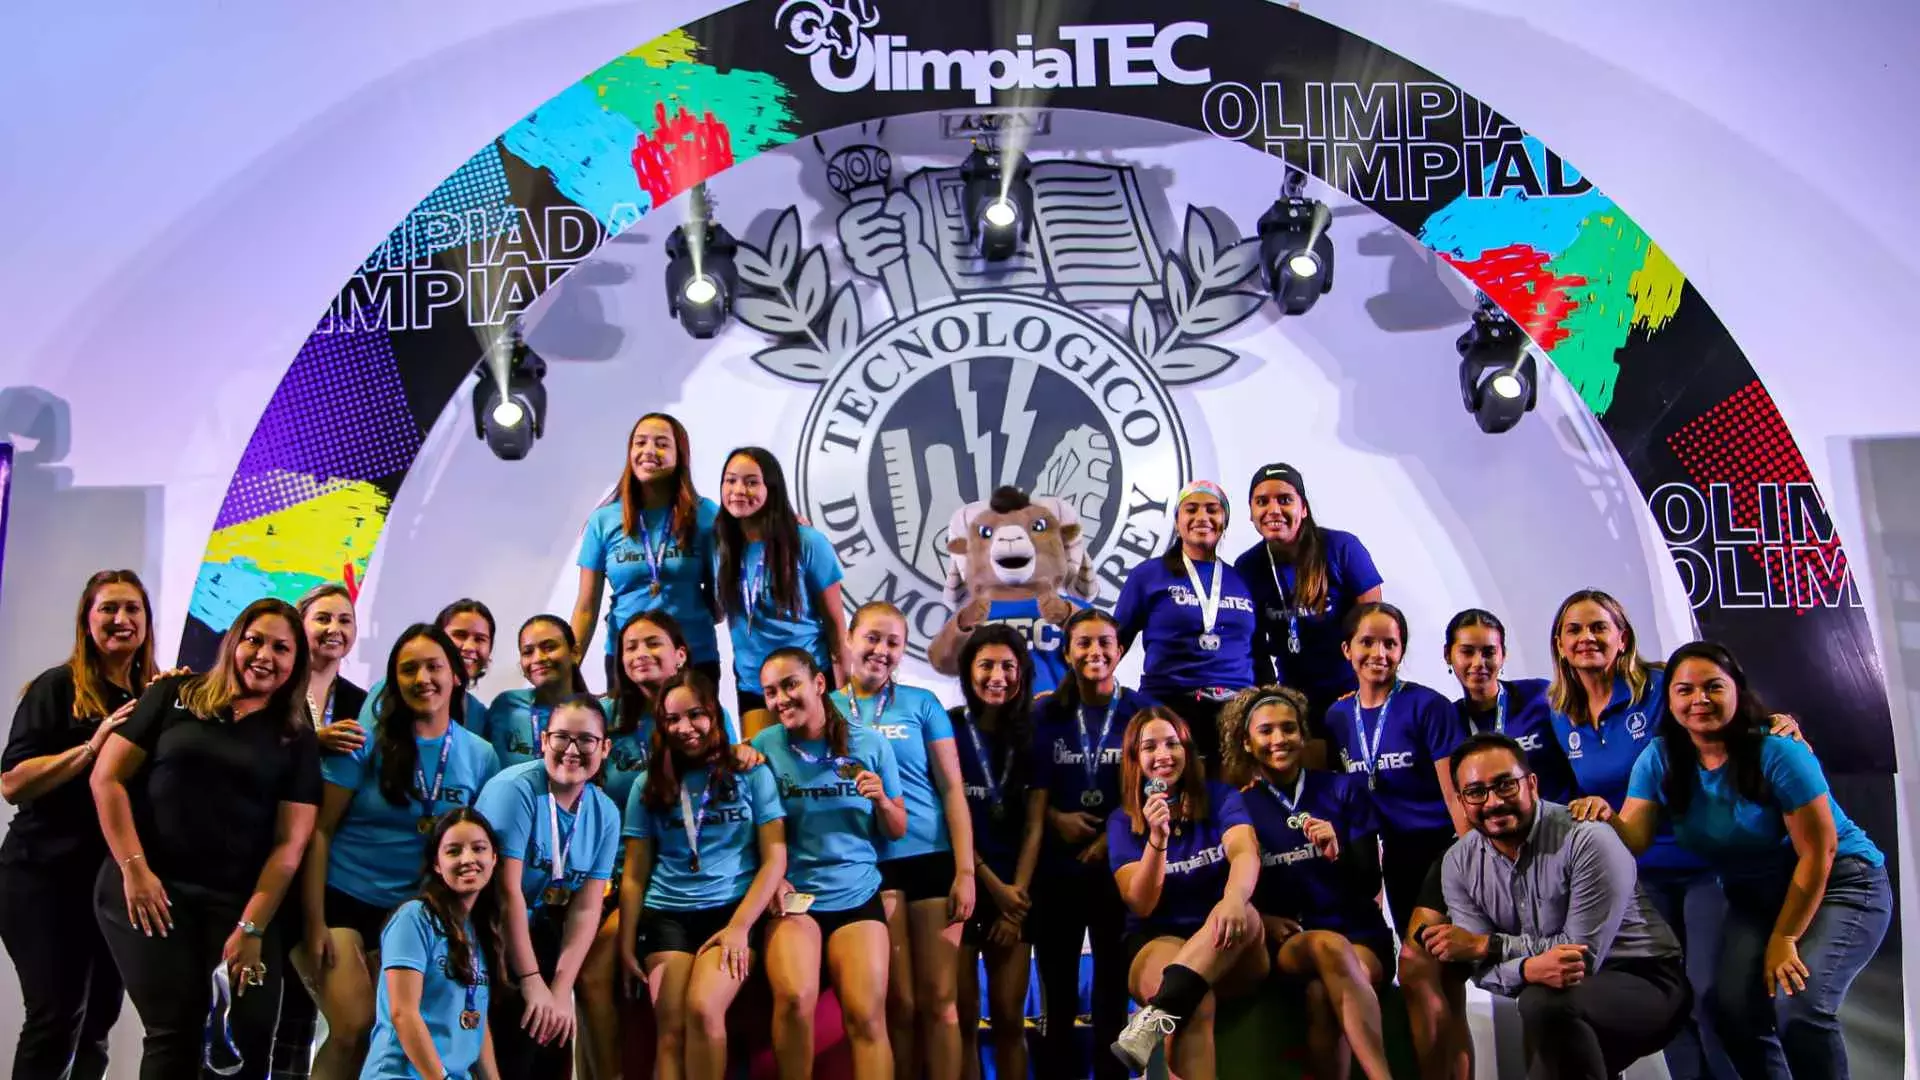 Campus-Tampico-celebra-su-competencia-deportiva-anual-23